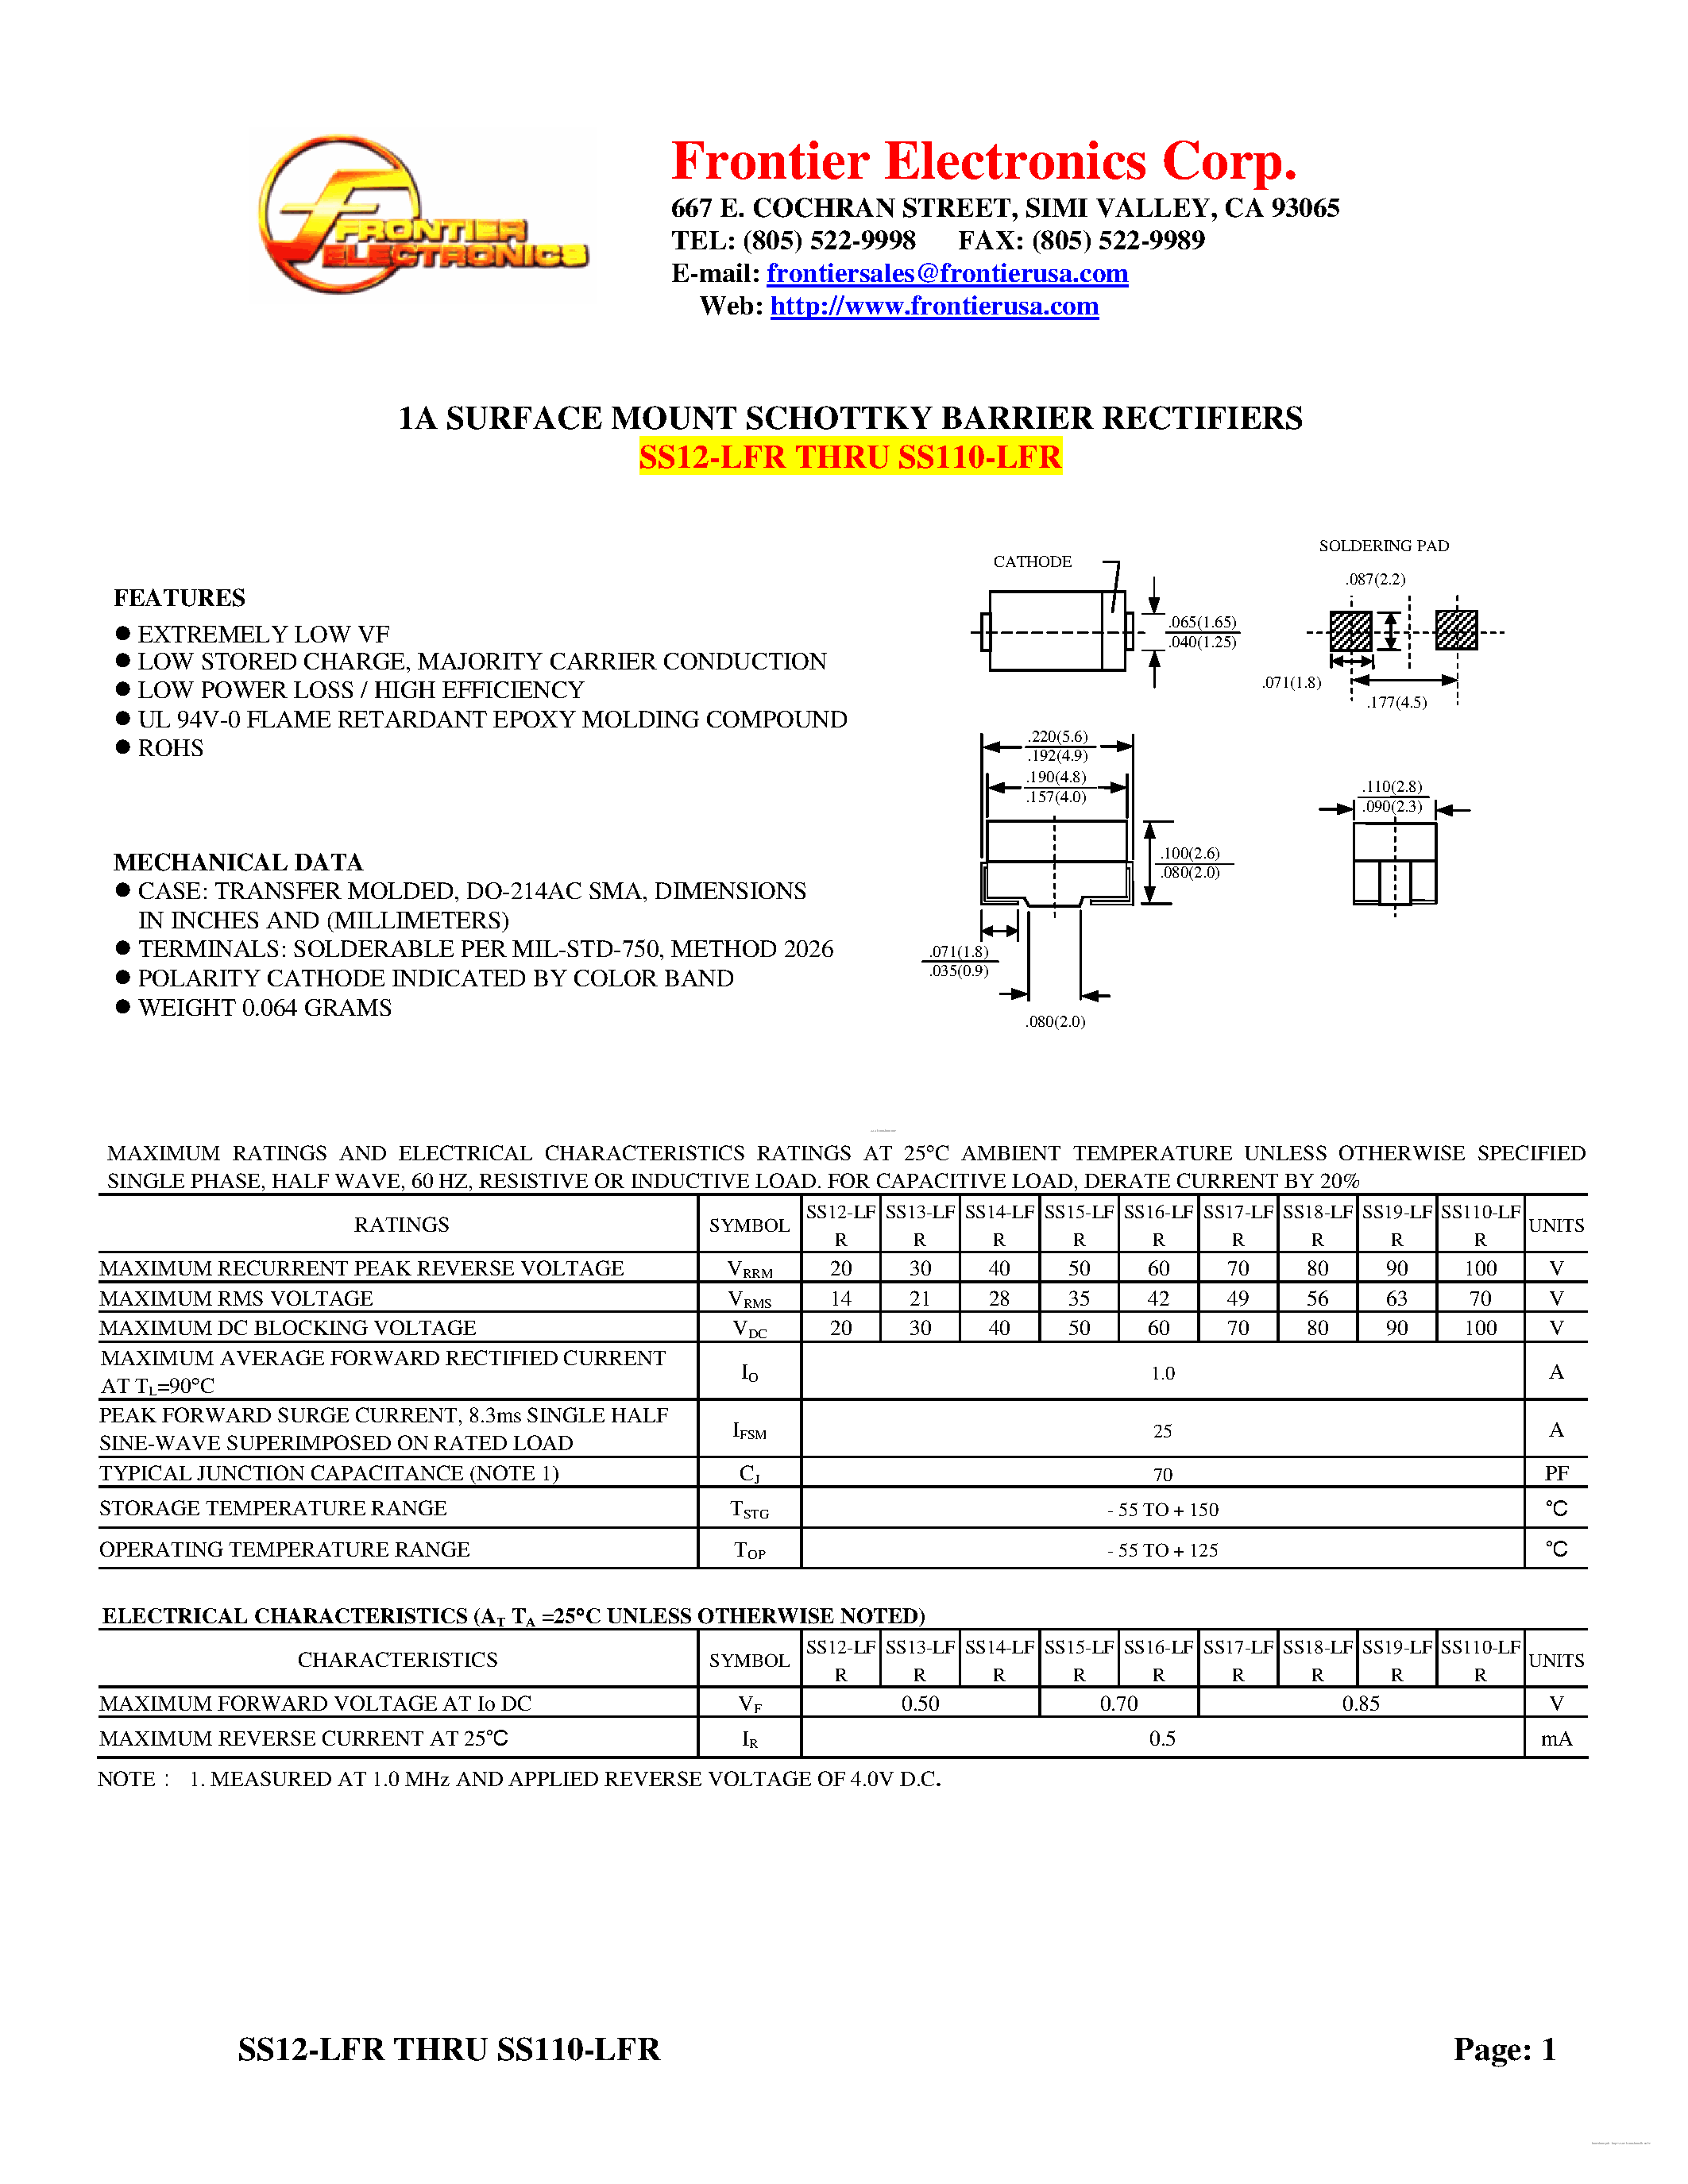 Datasheet SS110-LFR - page 1